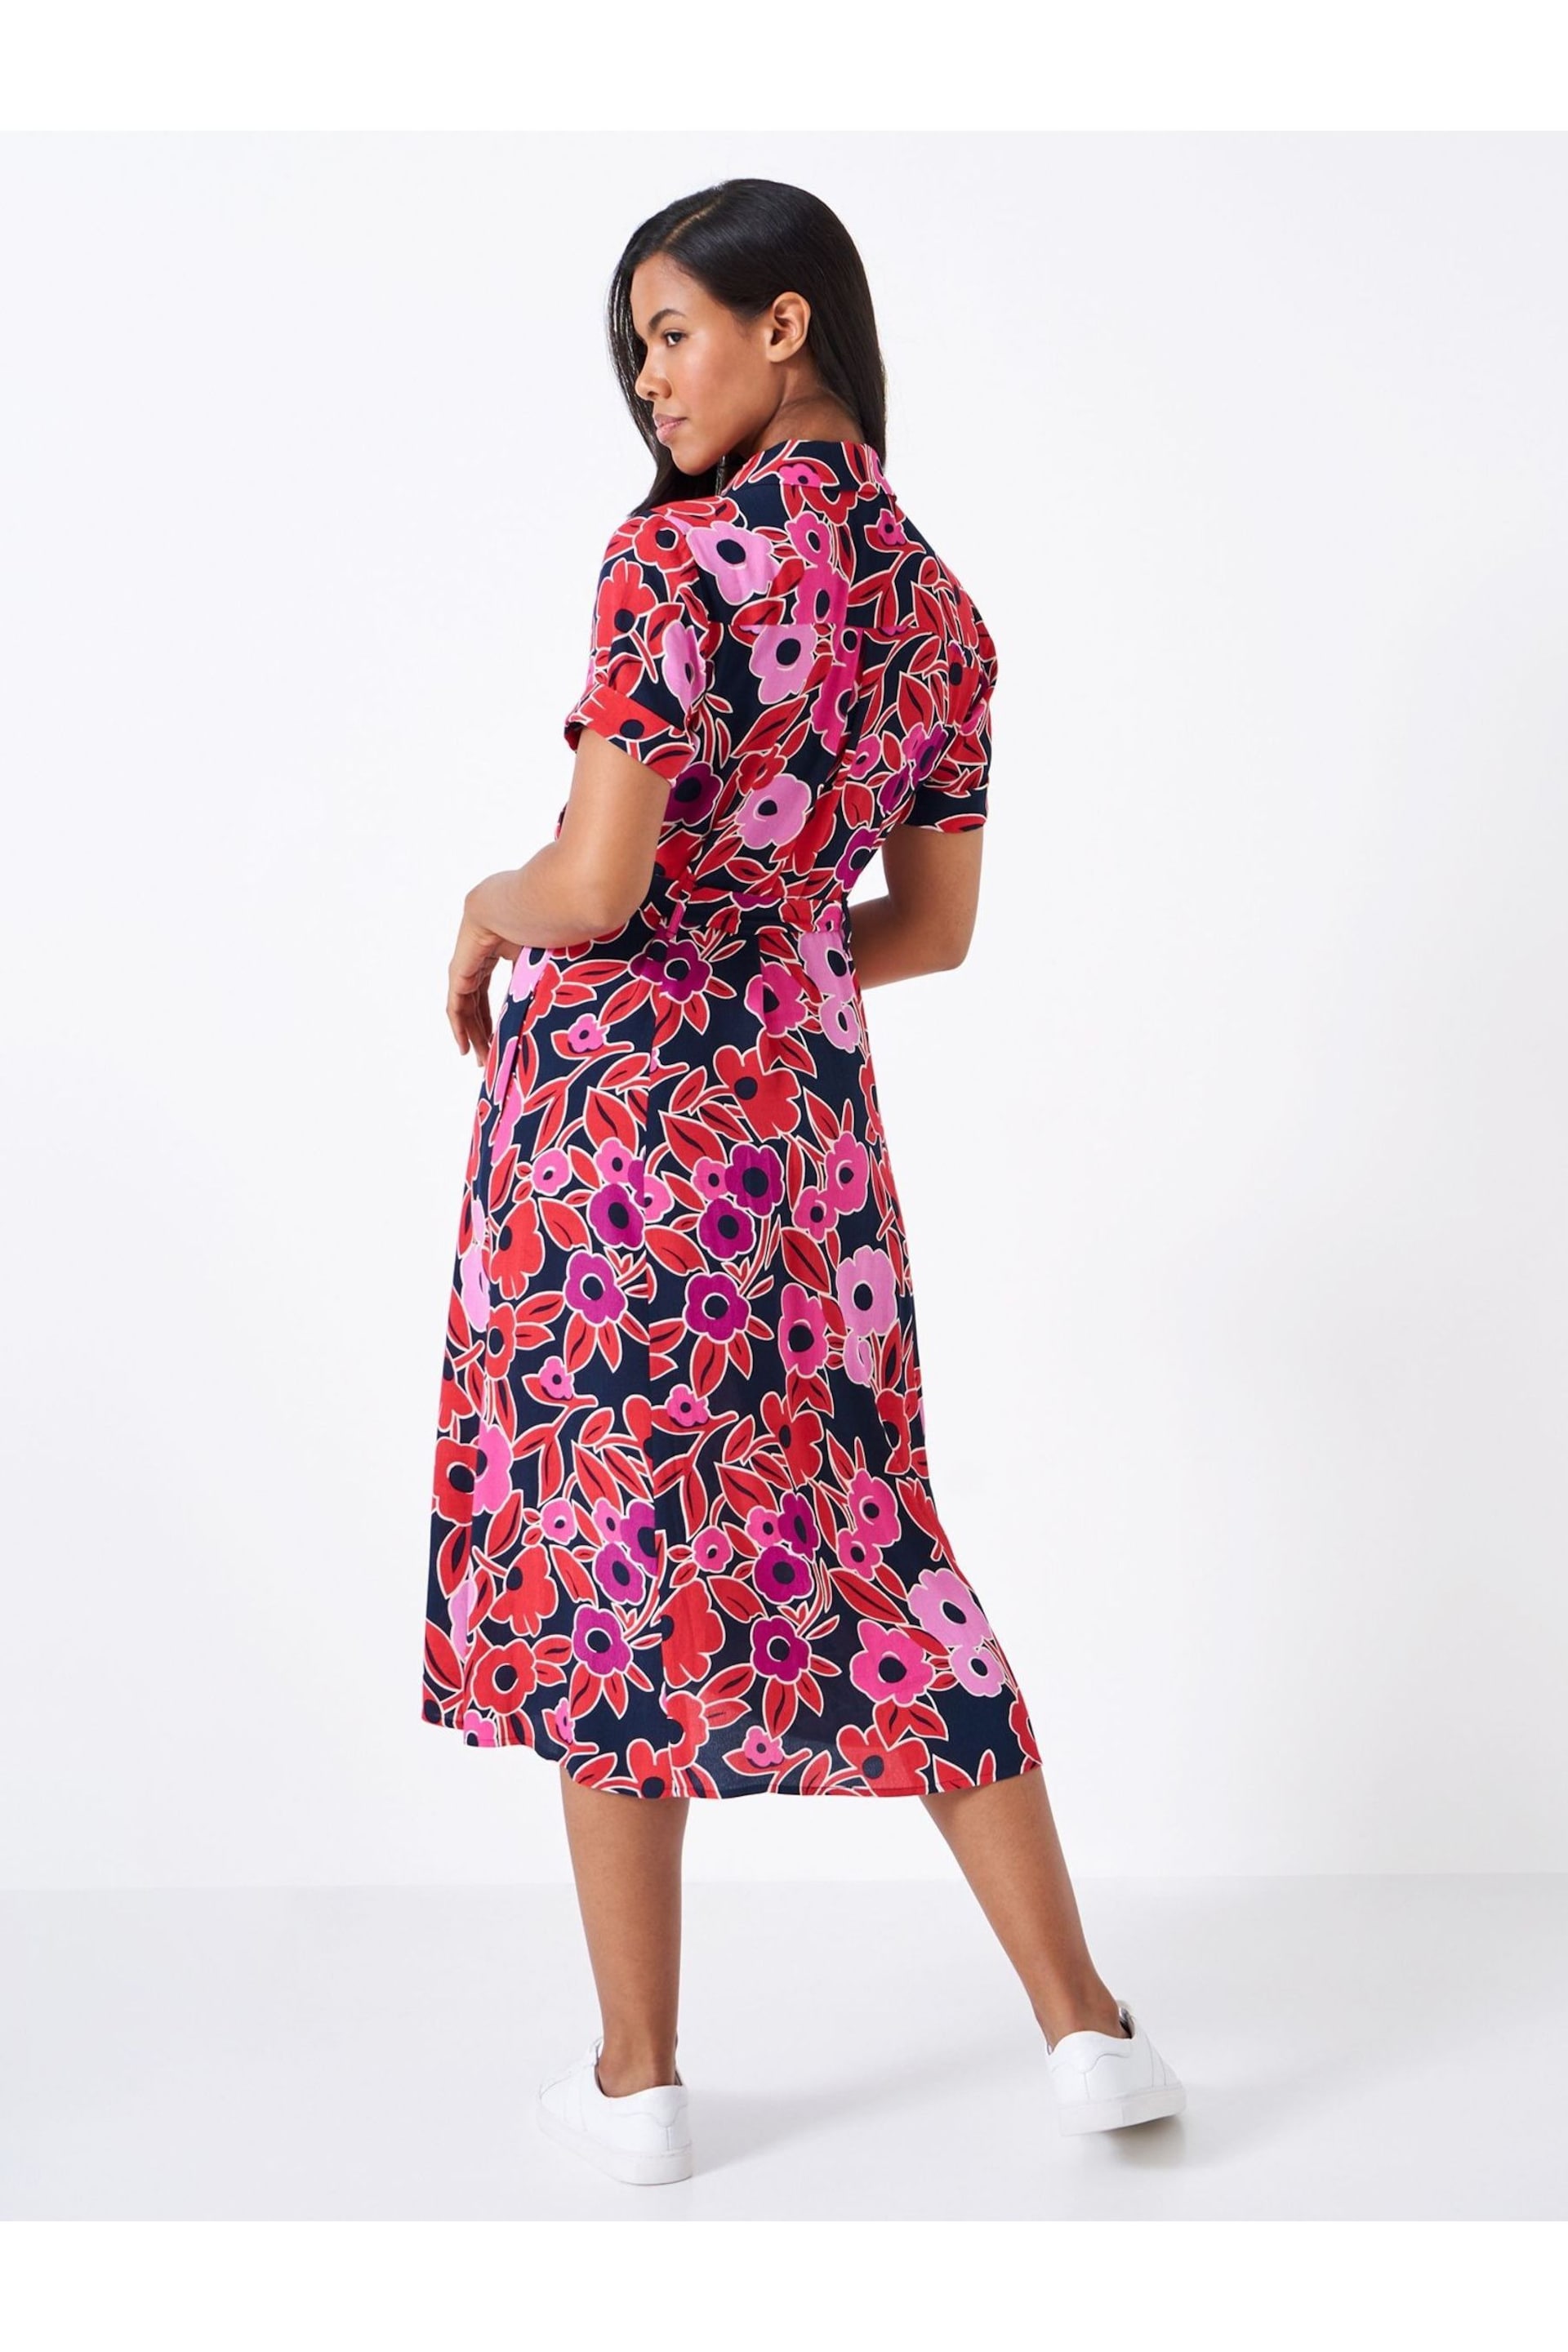 Crew Clothing Company Multi Floral Viscose Regular Shirt Dress - Image 2 of 5